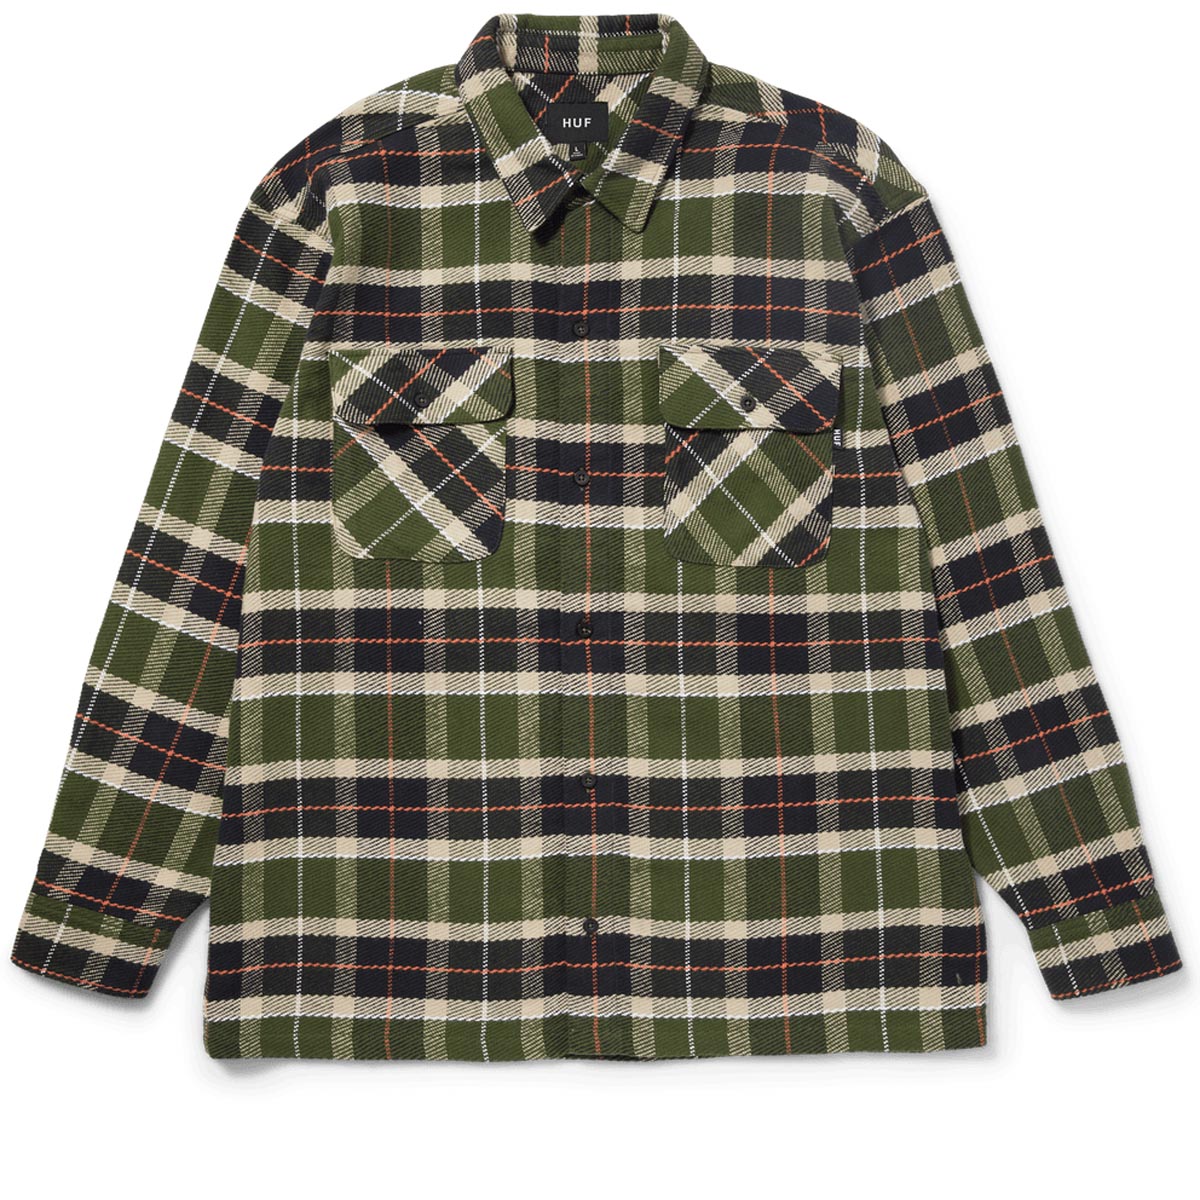 HUF Prescott Flannel Shirt - Pine image 2